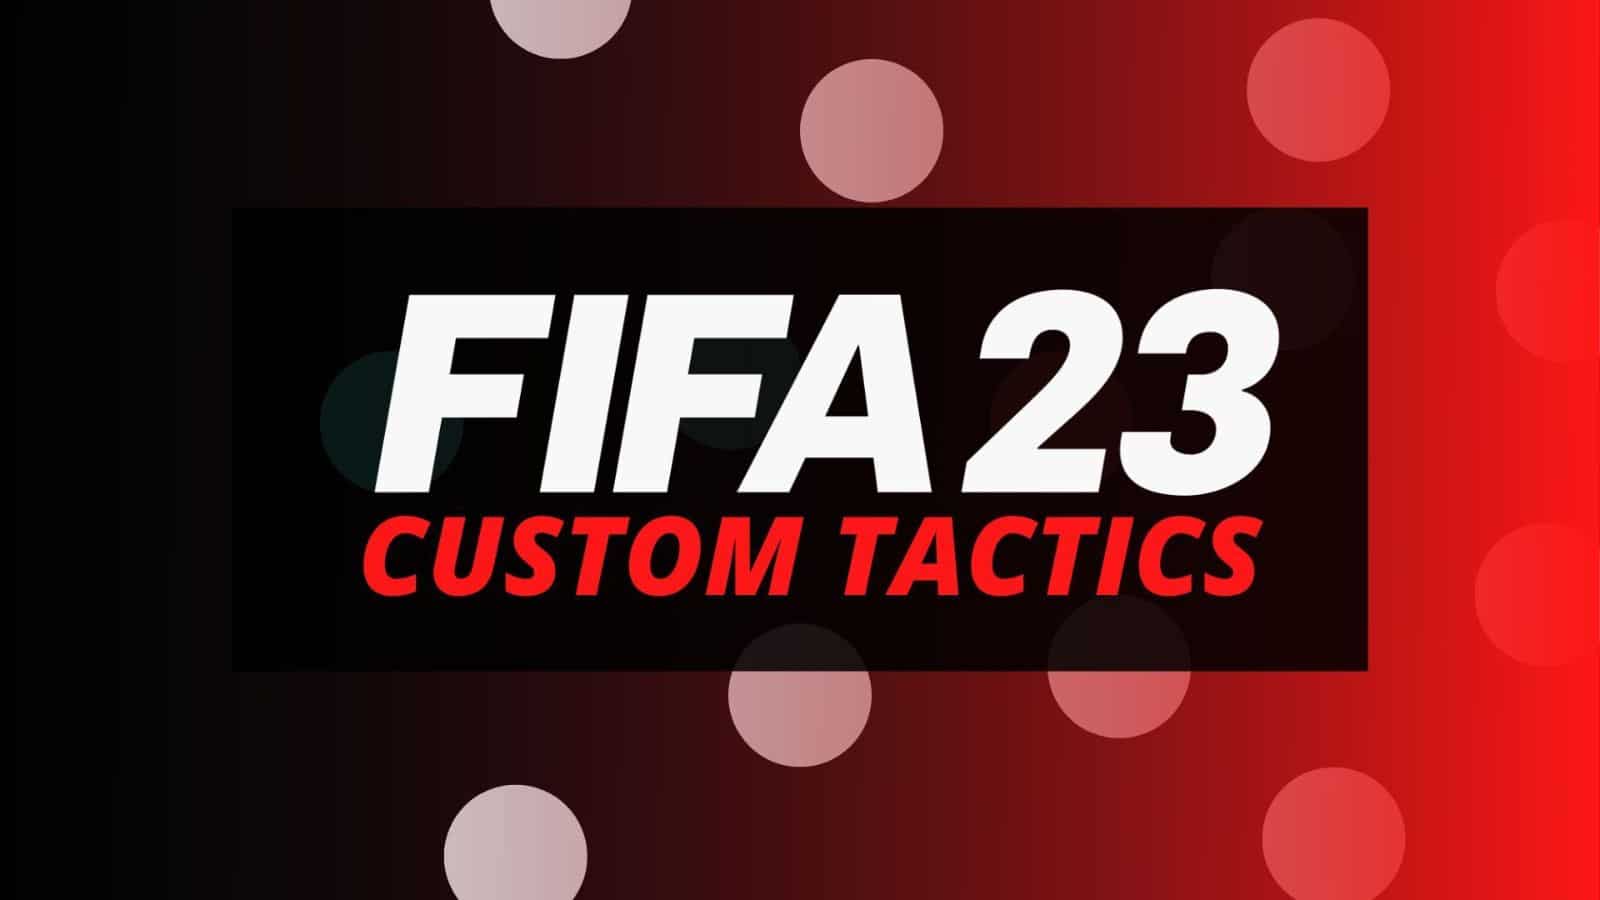 FIFA 23 career mode highest potential player list revealed